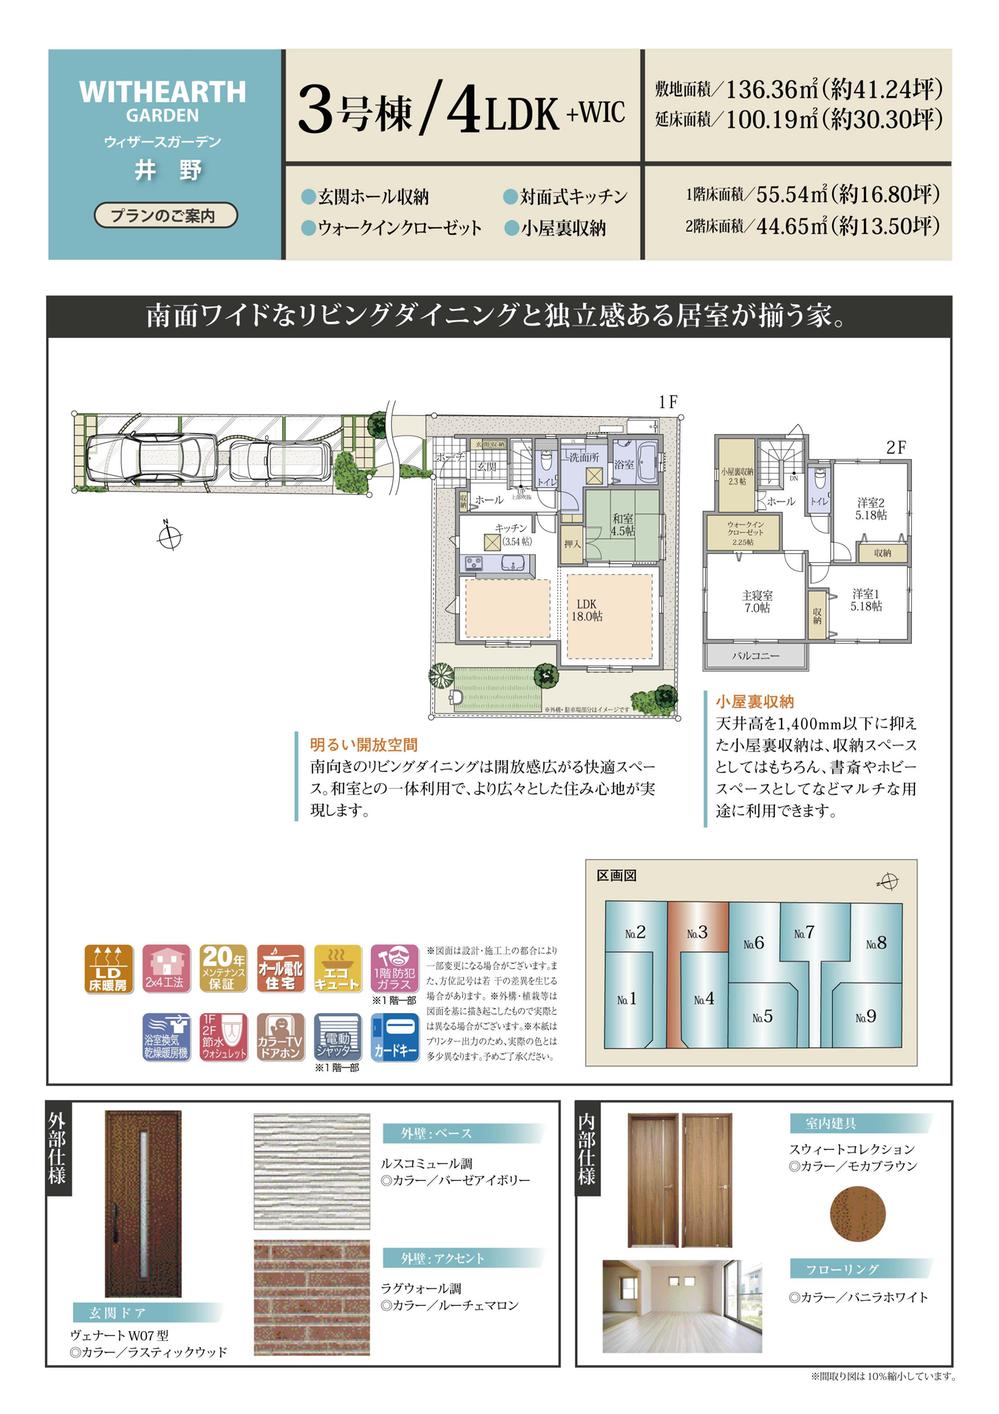 Floor plan. (1 Building) same specification